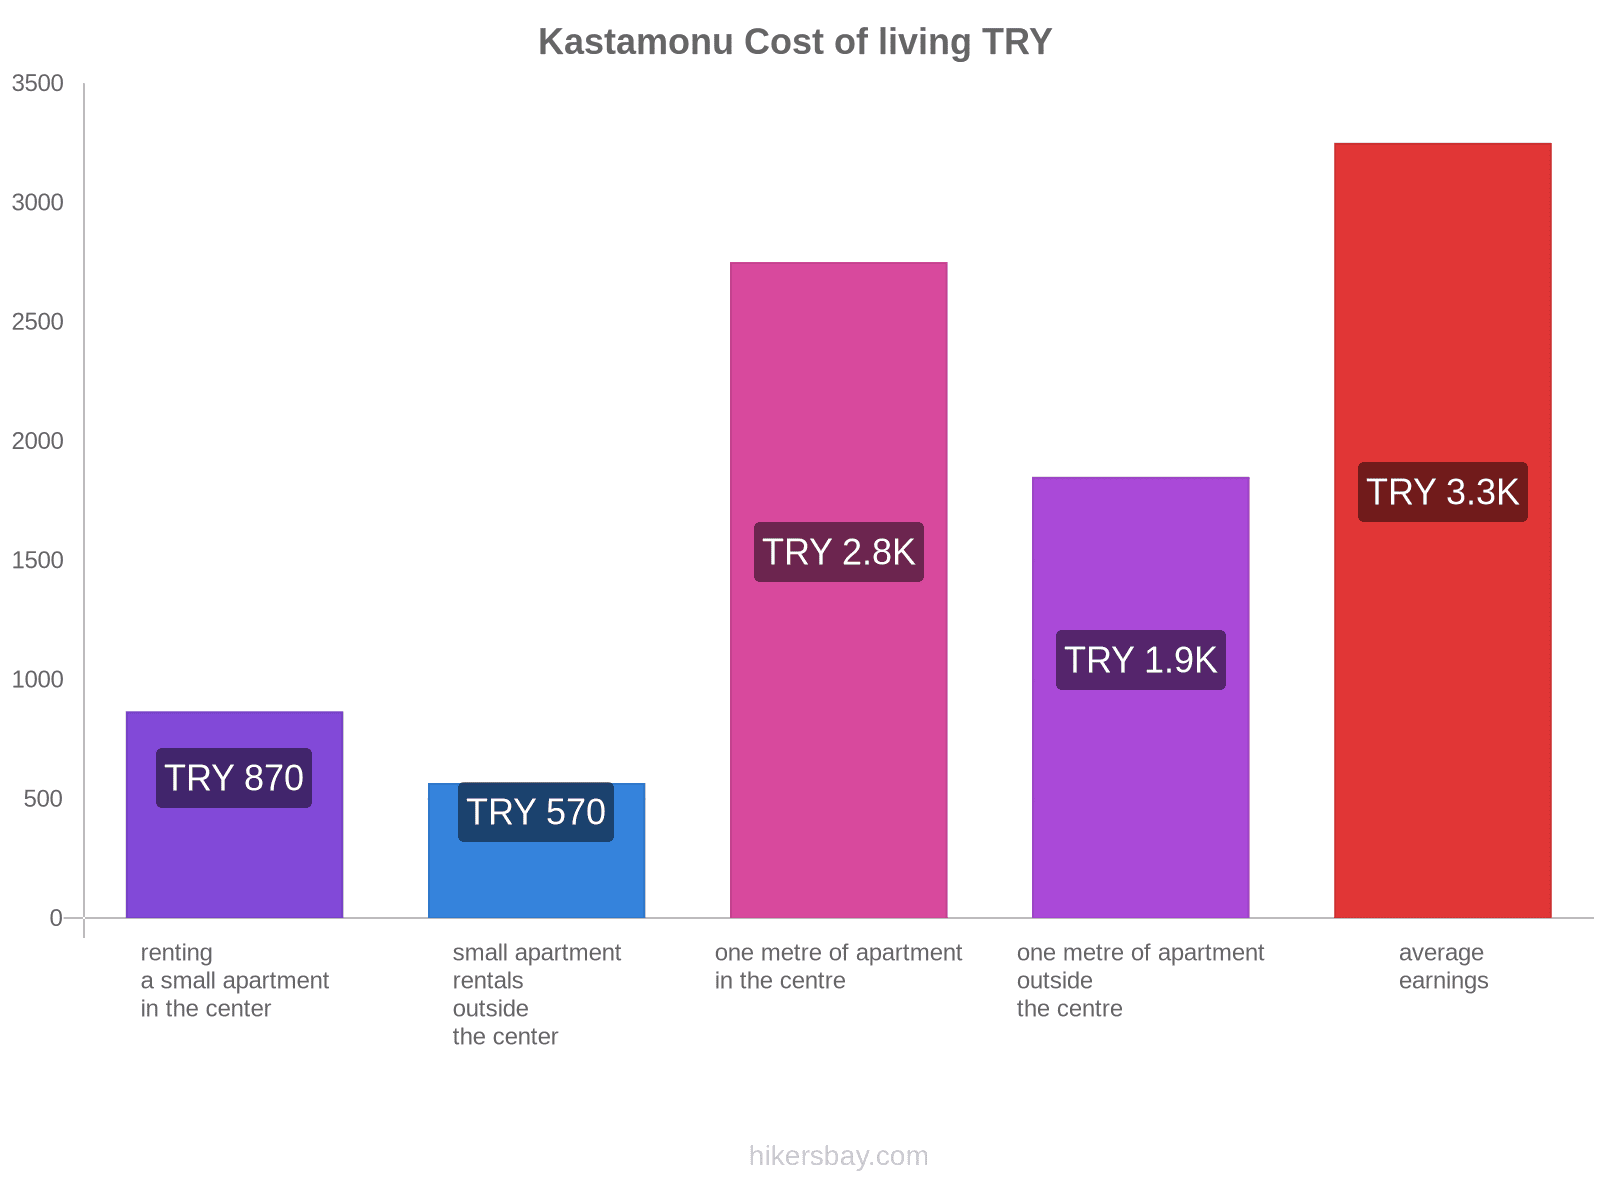 Kastamonu cost of living hikersbay.com